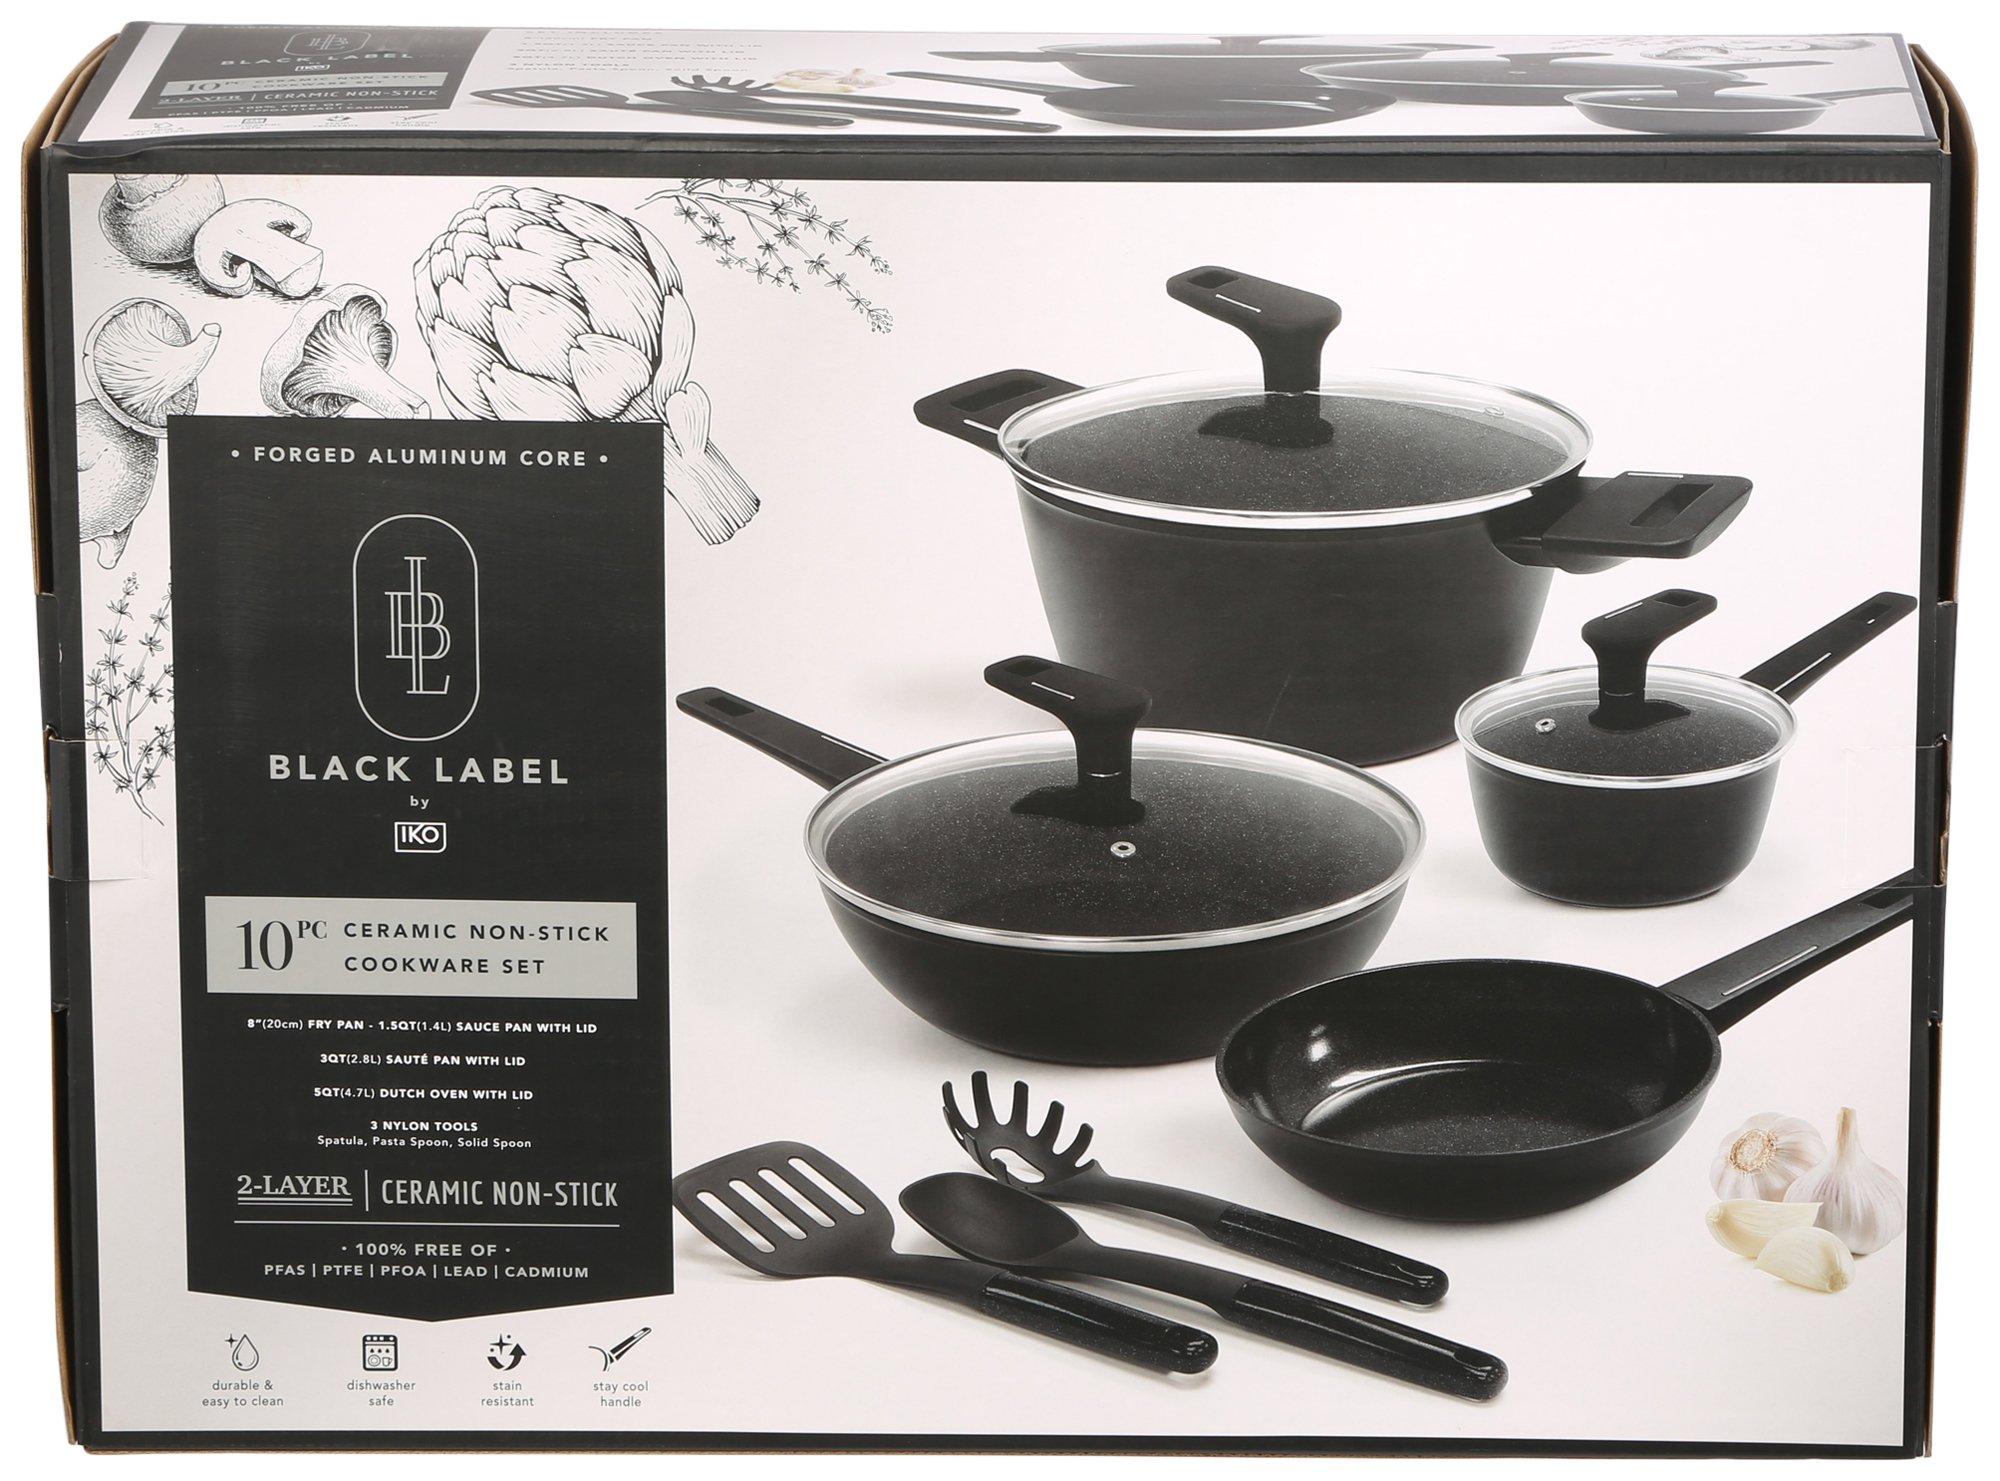 https://images.beallsflorida.com/i/beallsflorida/651-8454-2751-07-yyy/*Black-Label-10pc-Ceramic-Non-Stick-Cookware-Set*?$BR_thumbnail$&fmt=auto&qlt=default